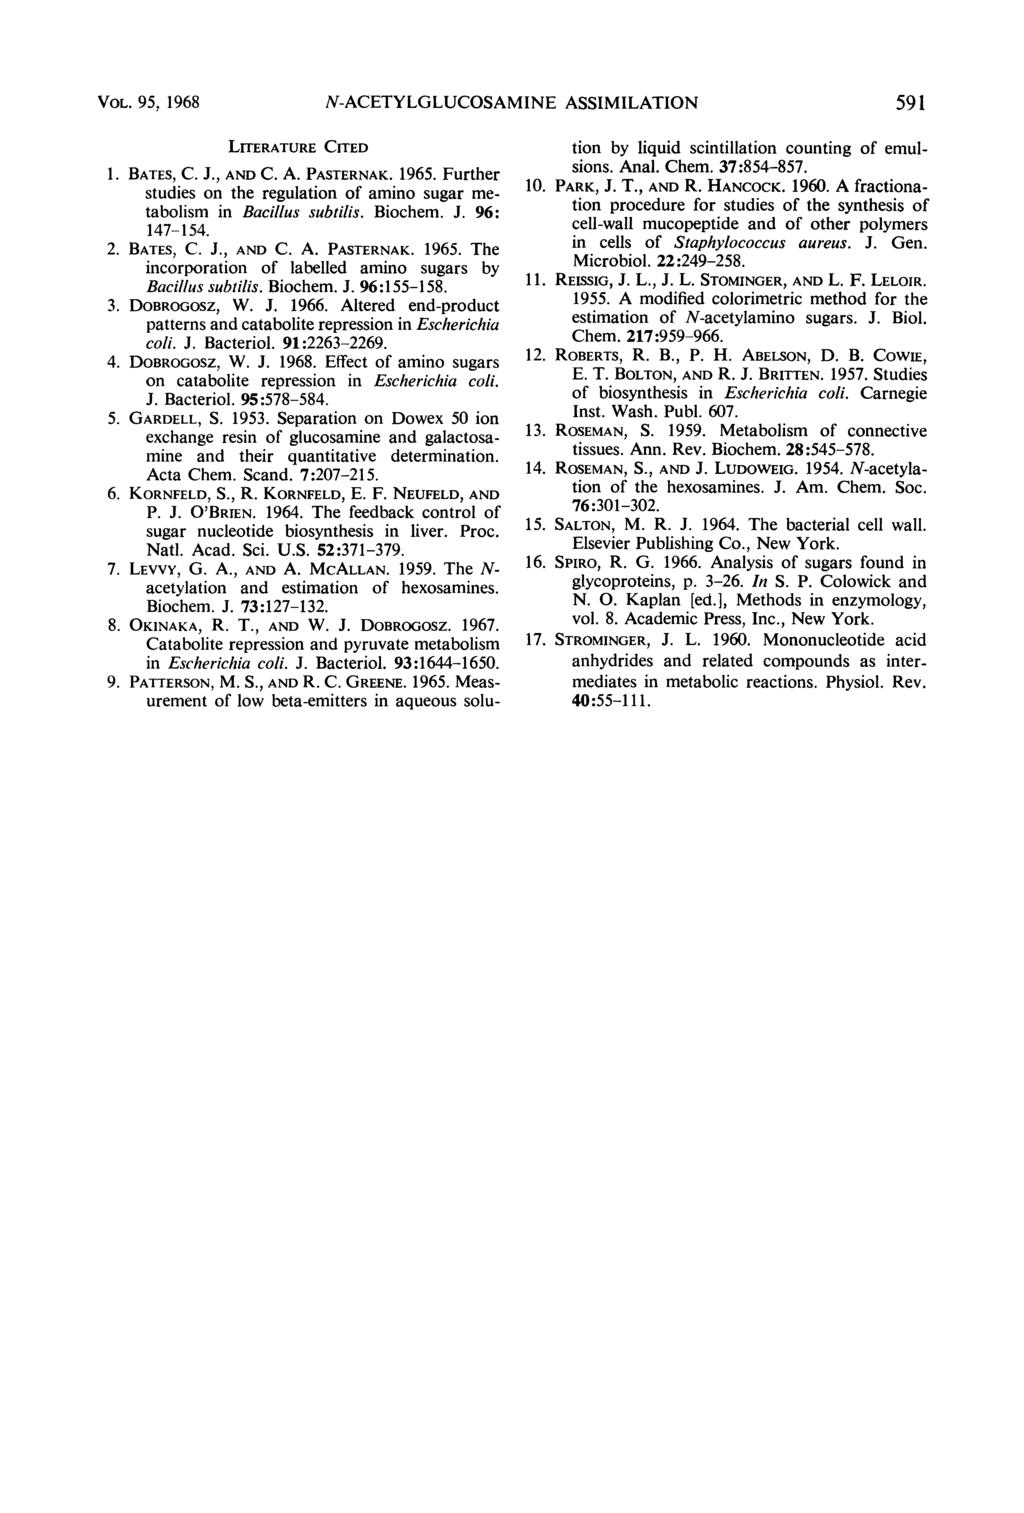 VOL. 95, 1968 N-ACETYLGLUCOSAMINE ASSIMILATION 591 LITERATURE CITED 1. BATES, C. J., AND C. A. PASTERNAK. 1965. Further studies on the regulation of amino sugar metabolism in Bacillus subtilis.